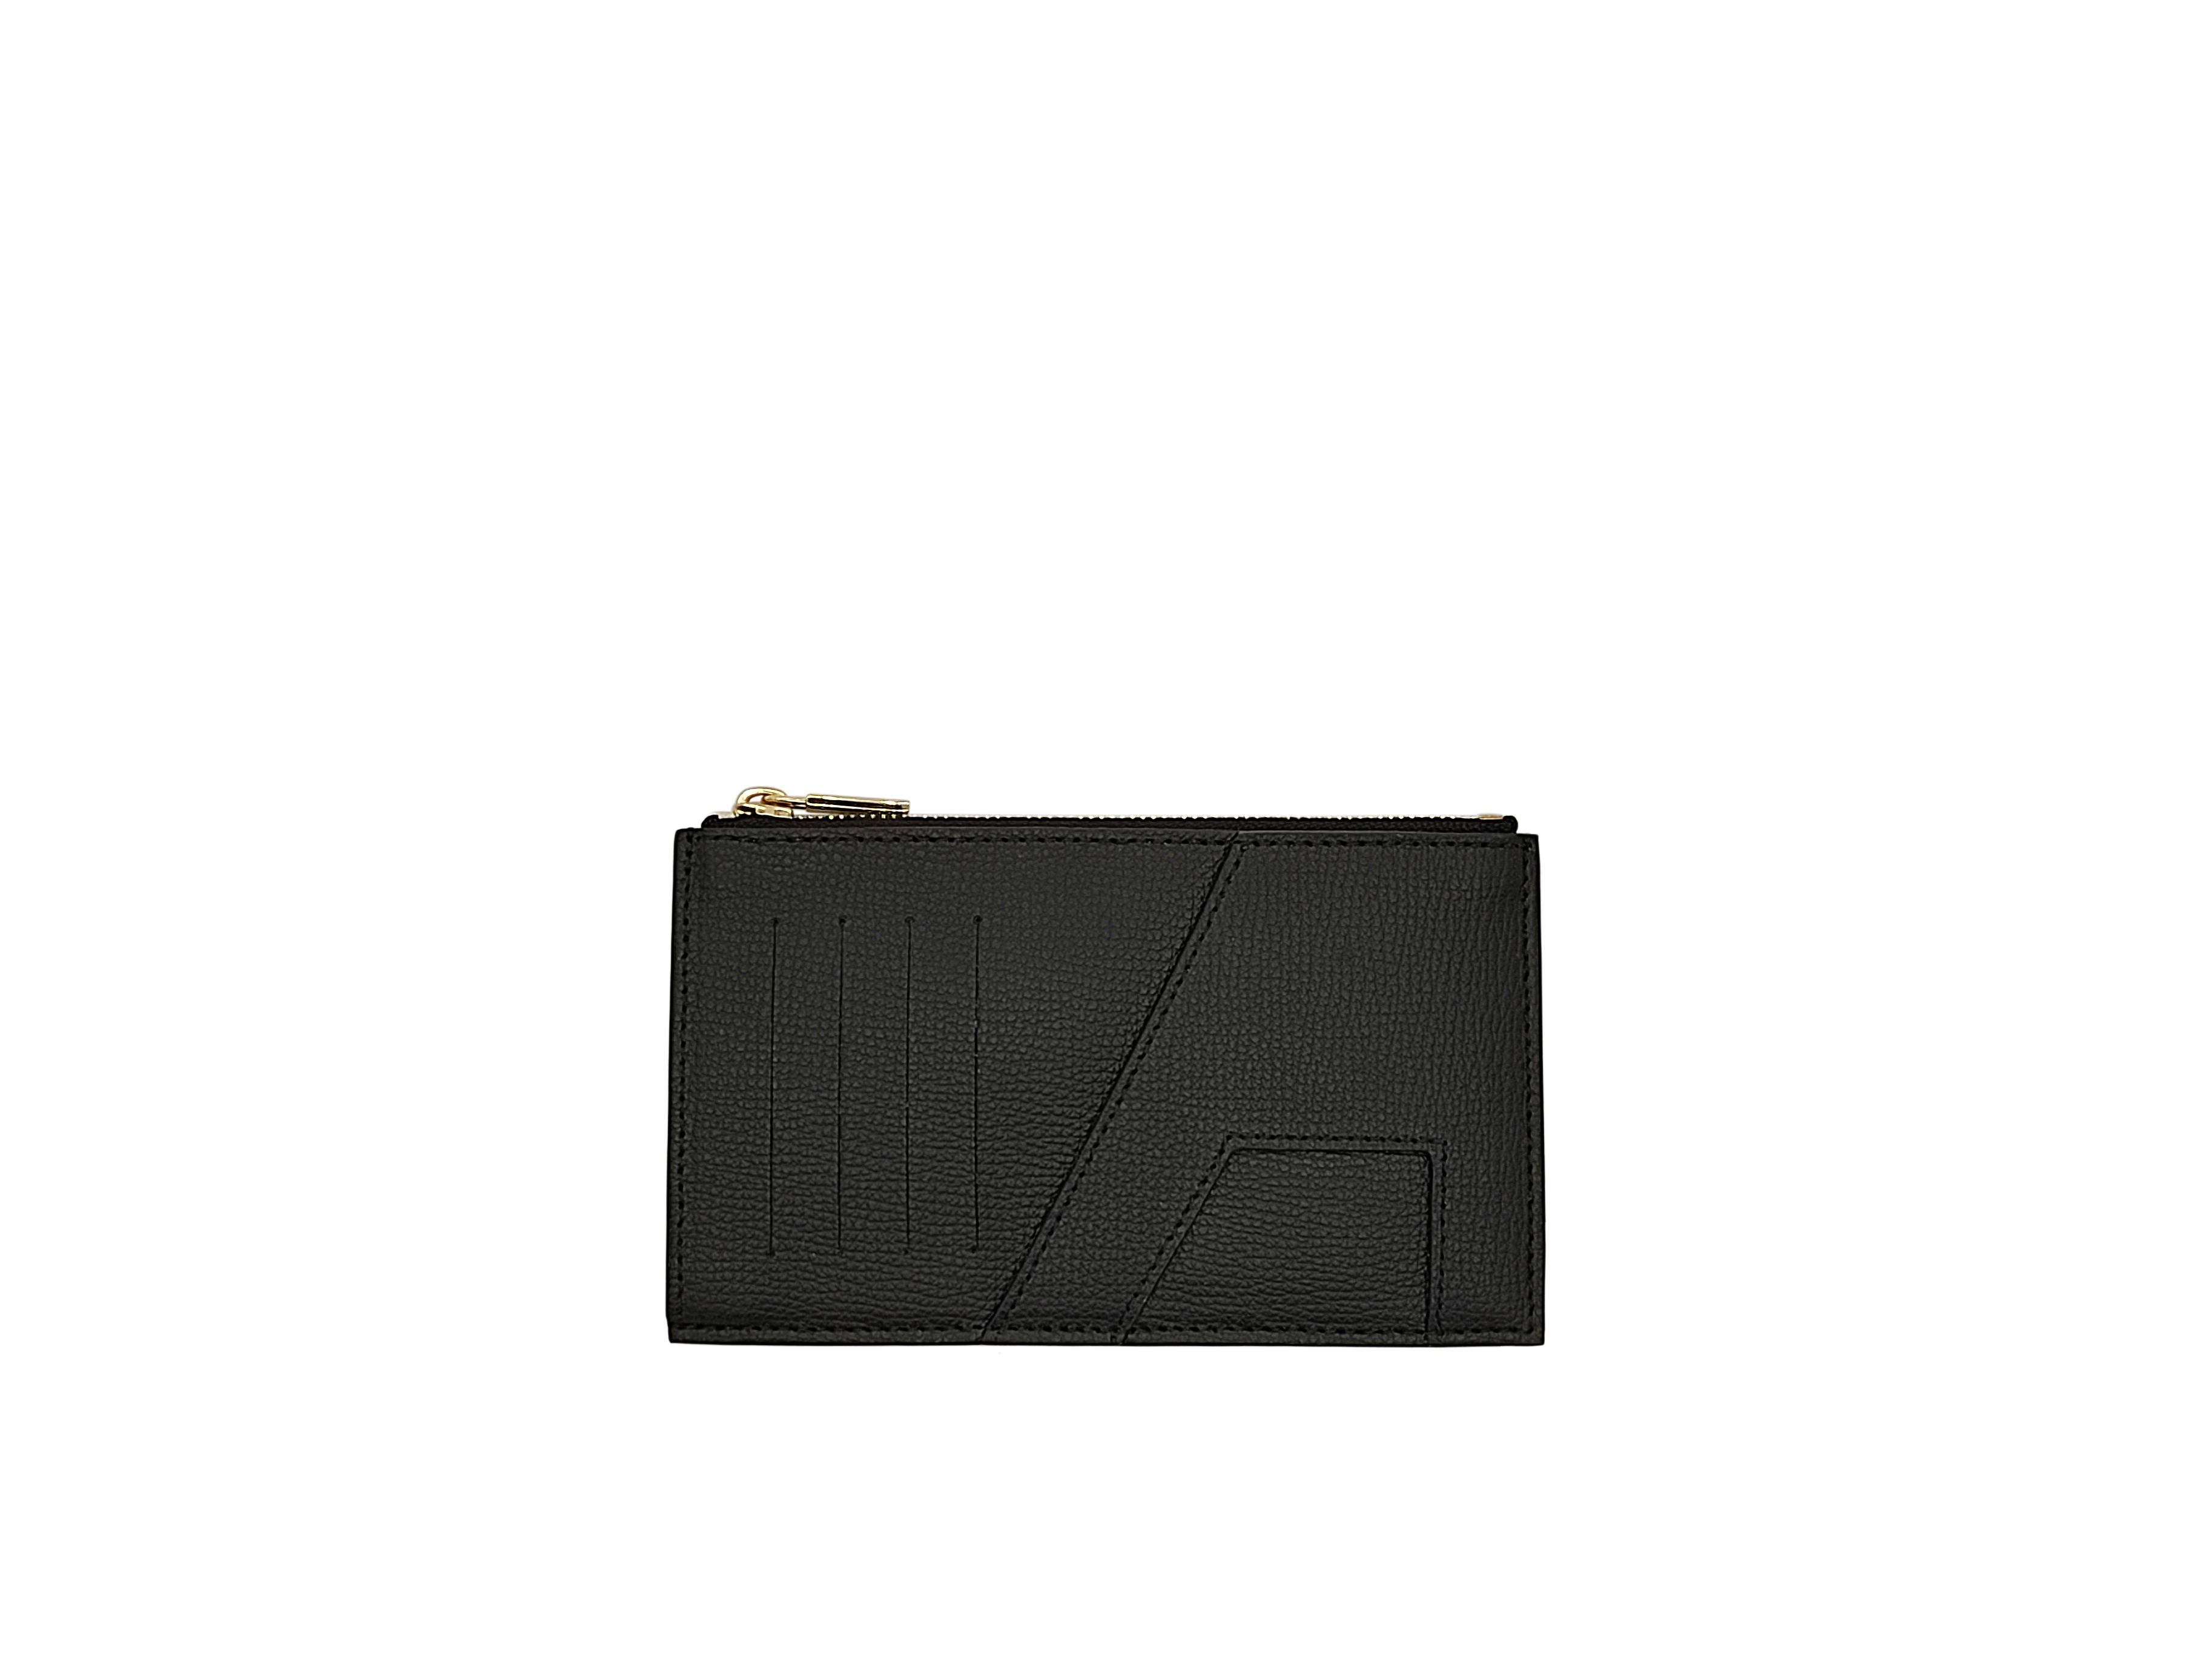 Louis Vuitton Coin Card Holder Black Taiga